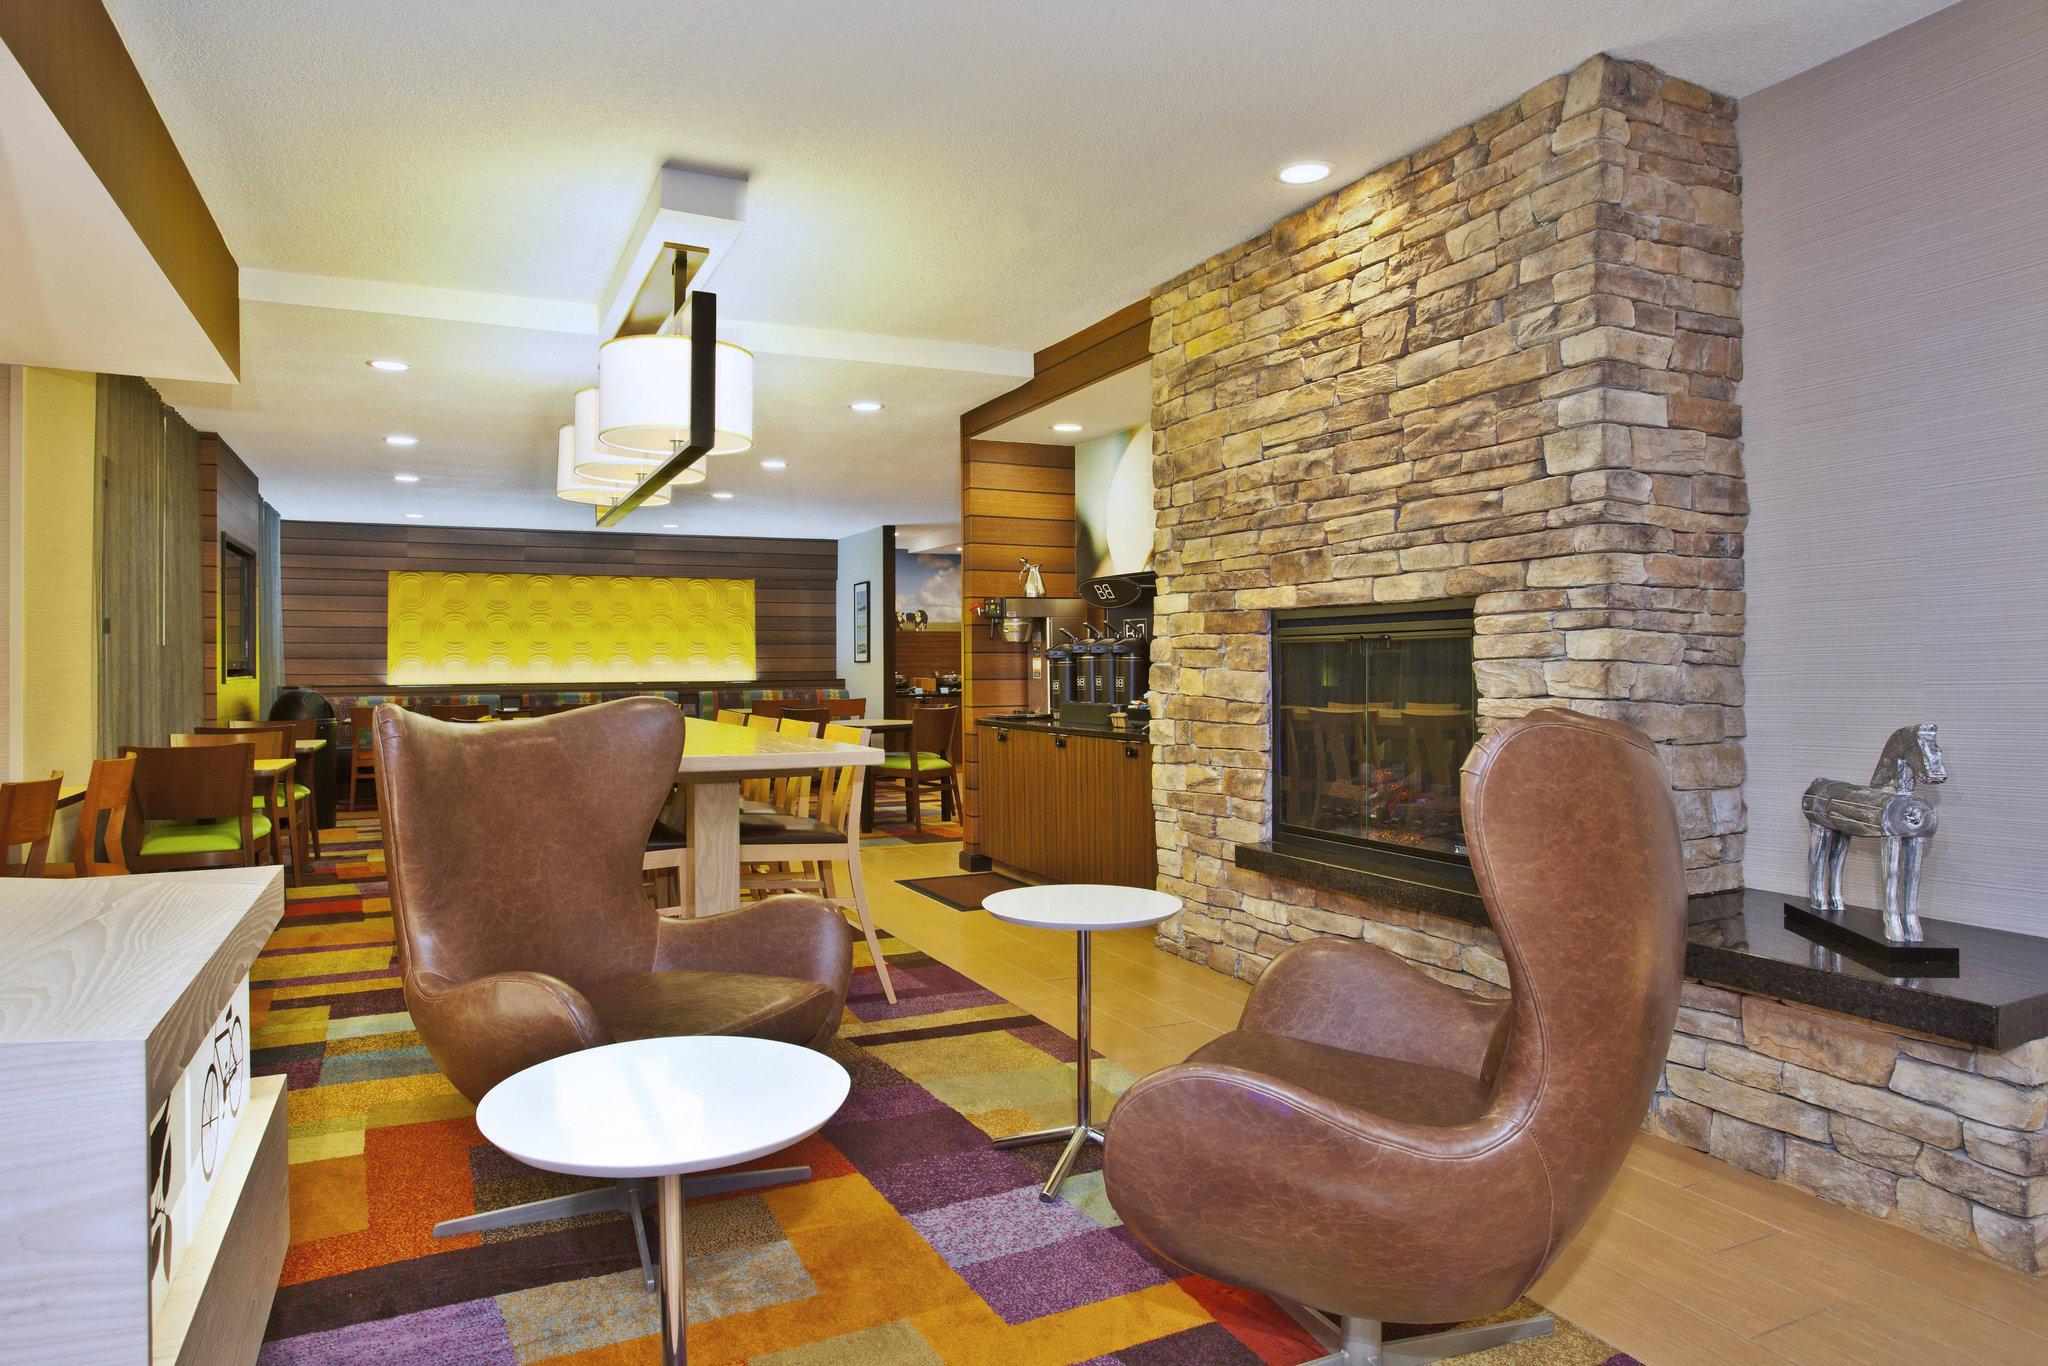 Fairfield Inn & Suites by Marriott Chicago Southeast/Hammond, IN Photo